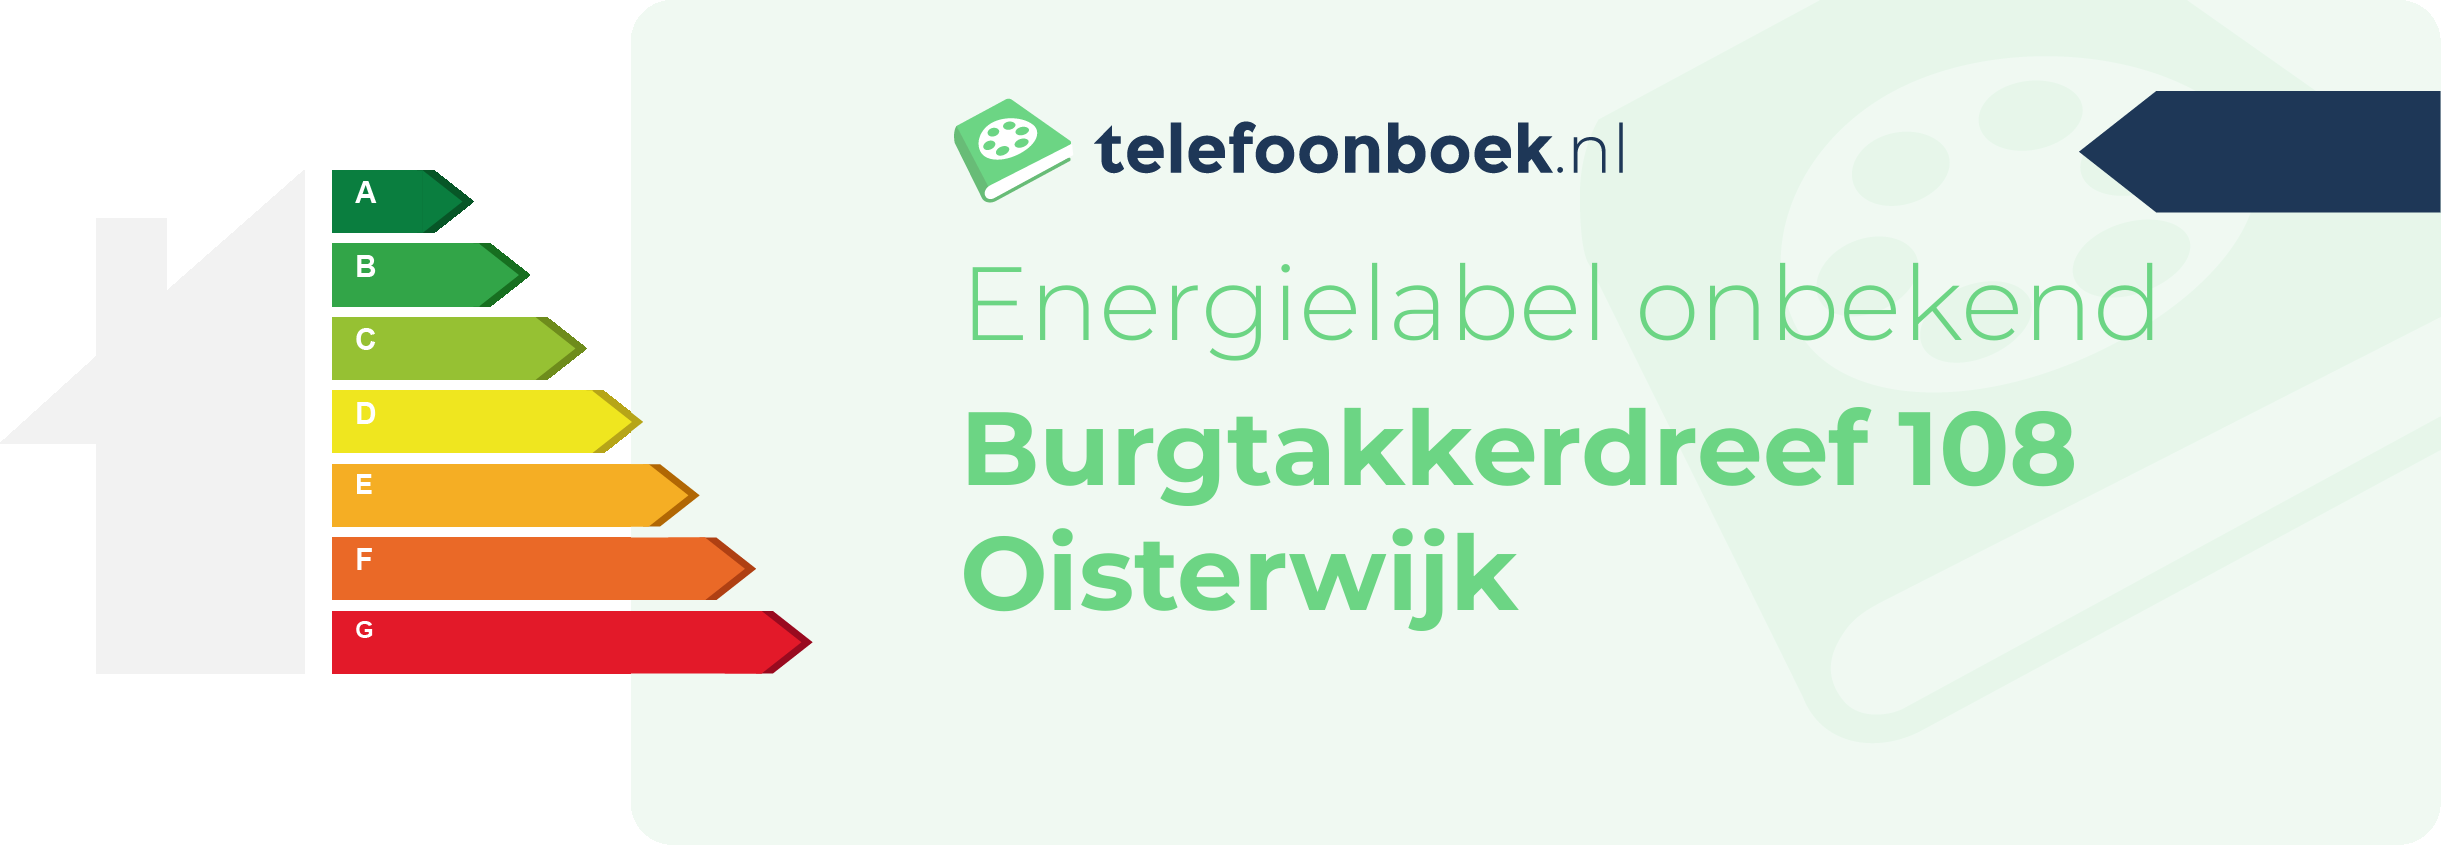 Energielabel Burgtakkerdreef 108 Oisterwijk